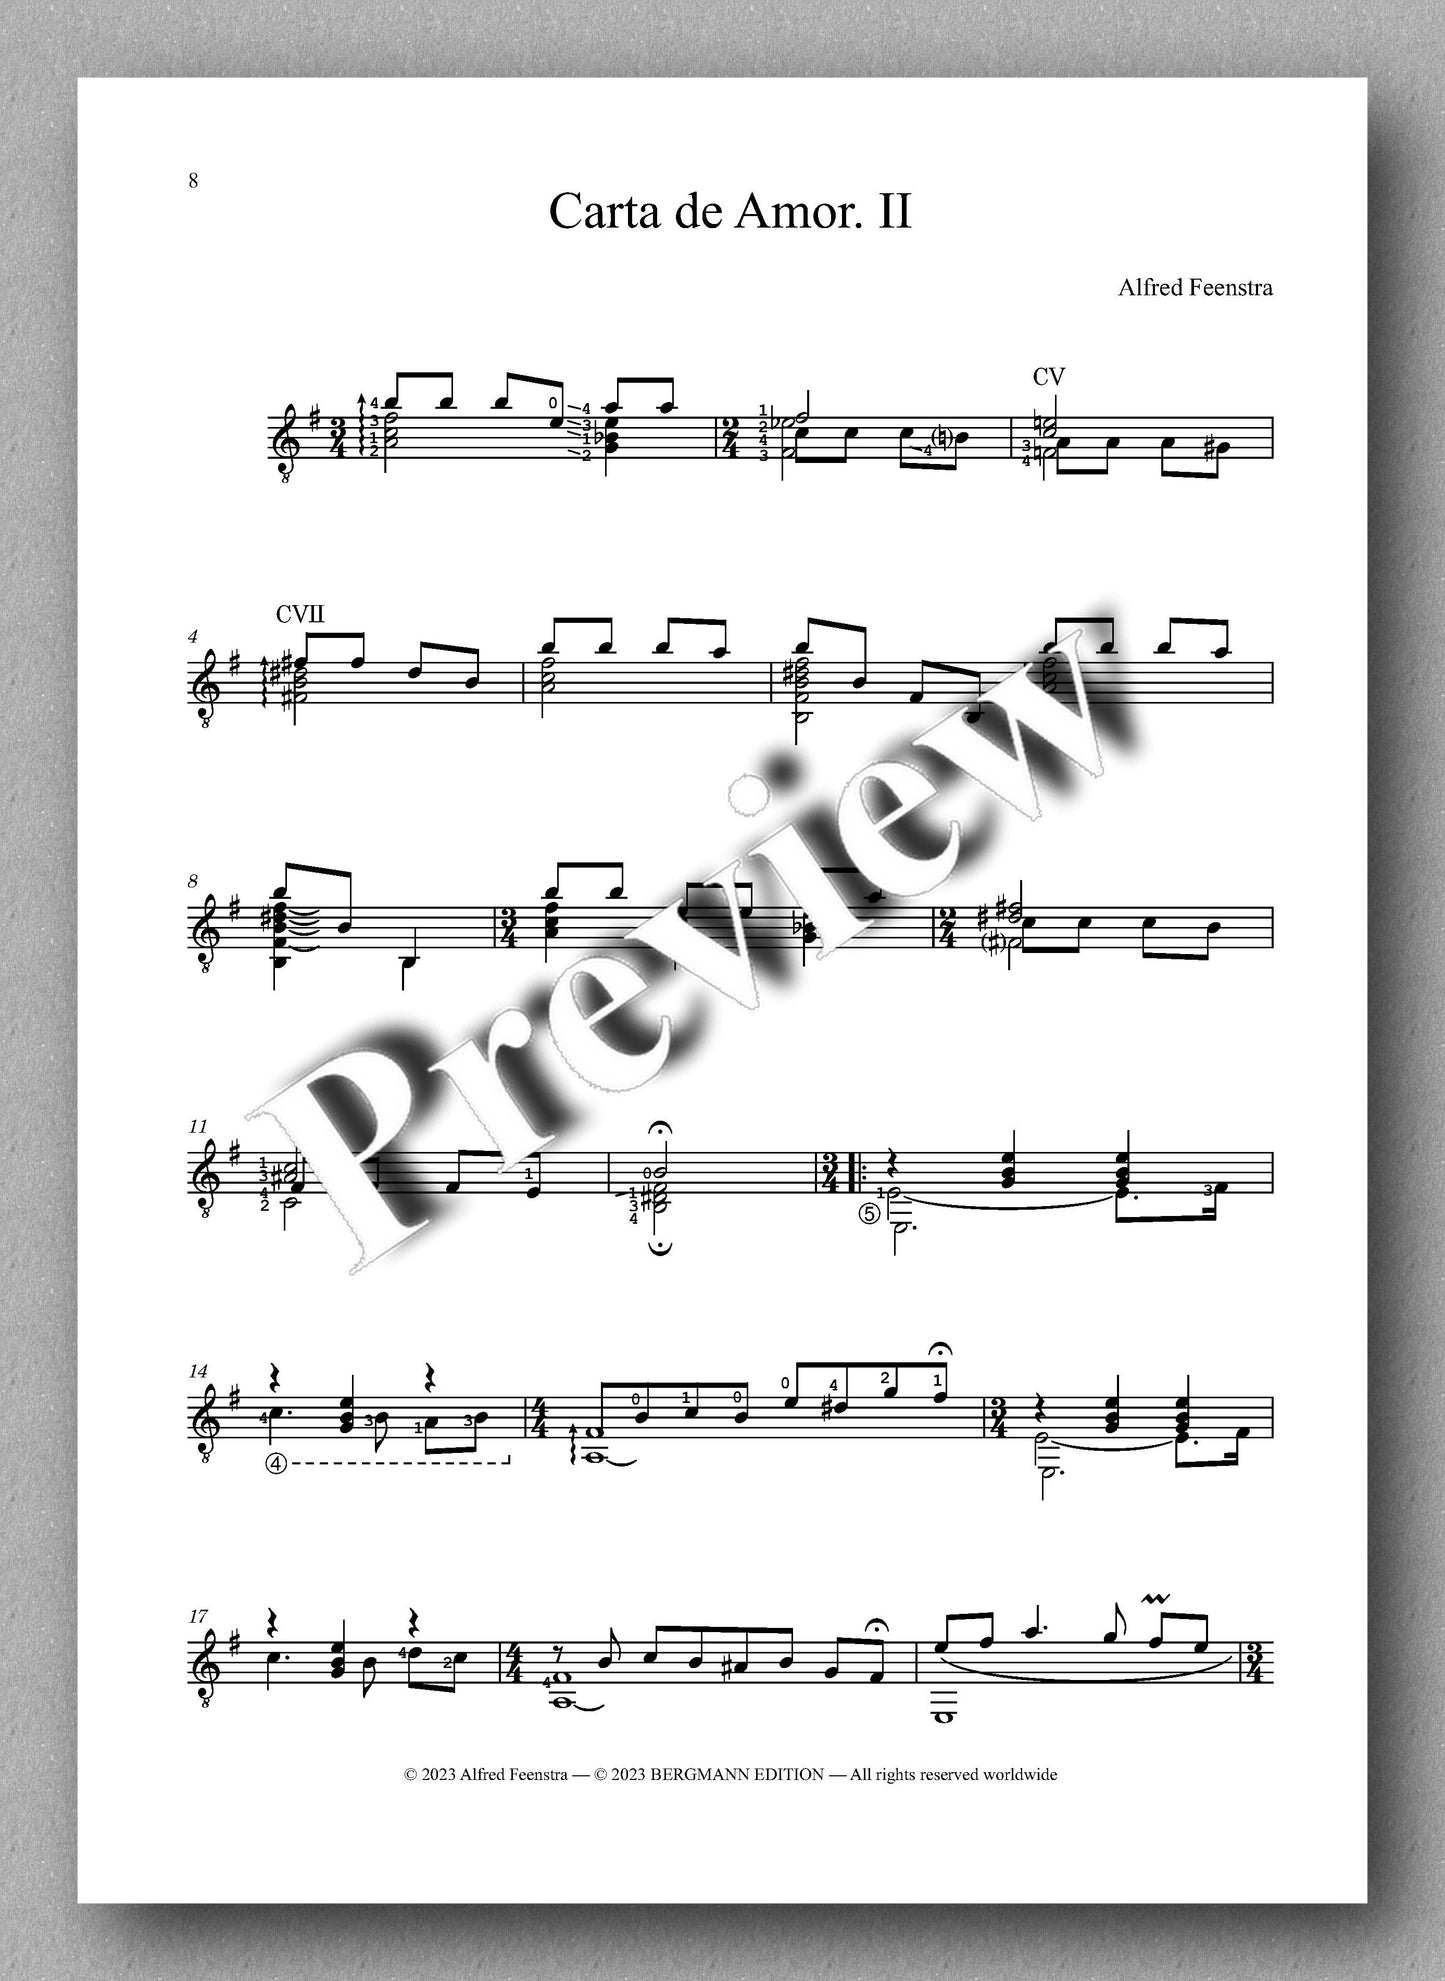 Alfred Feenstra, Cartas de Amor - preview of the music score 2